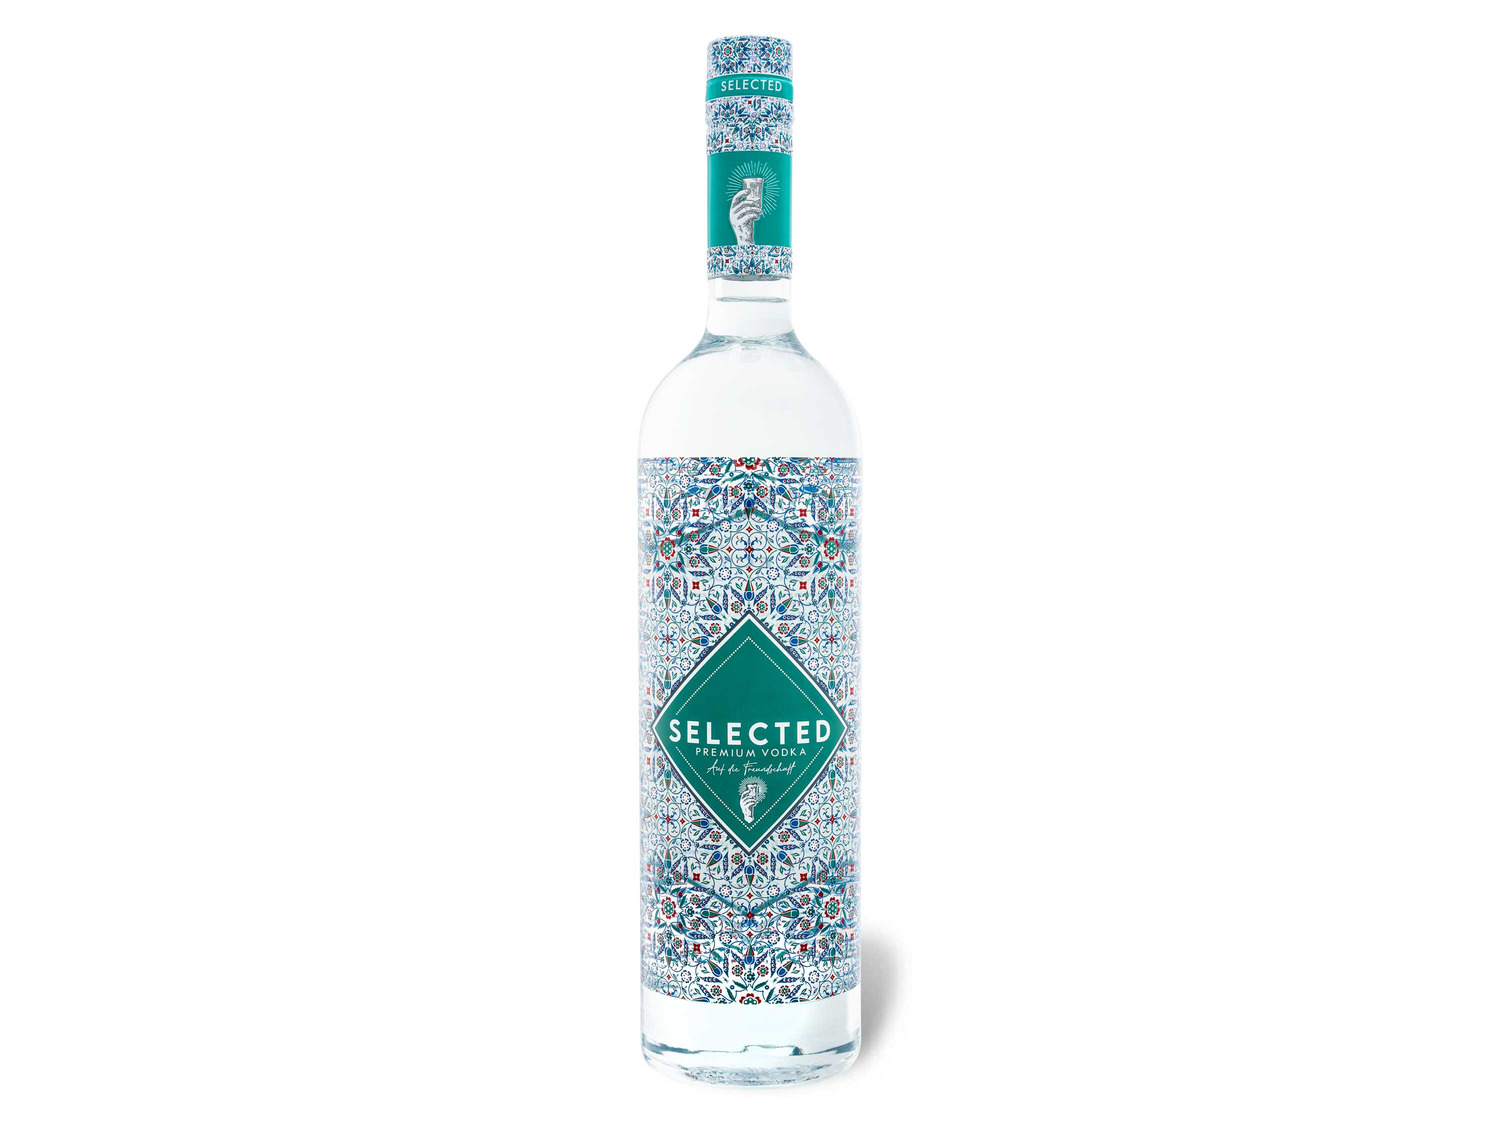 Selected Premium Vodka 38% Vol online kaufen | LIDL